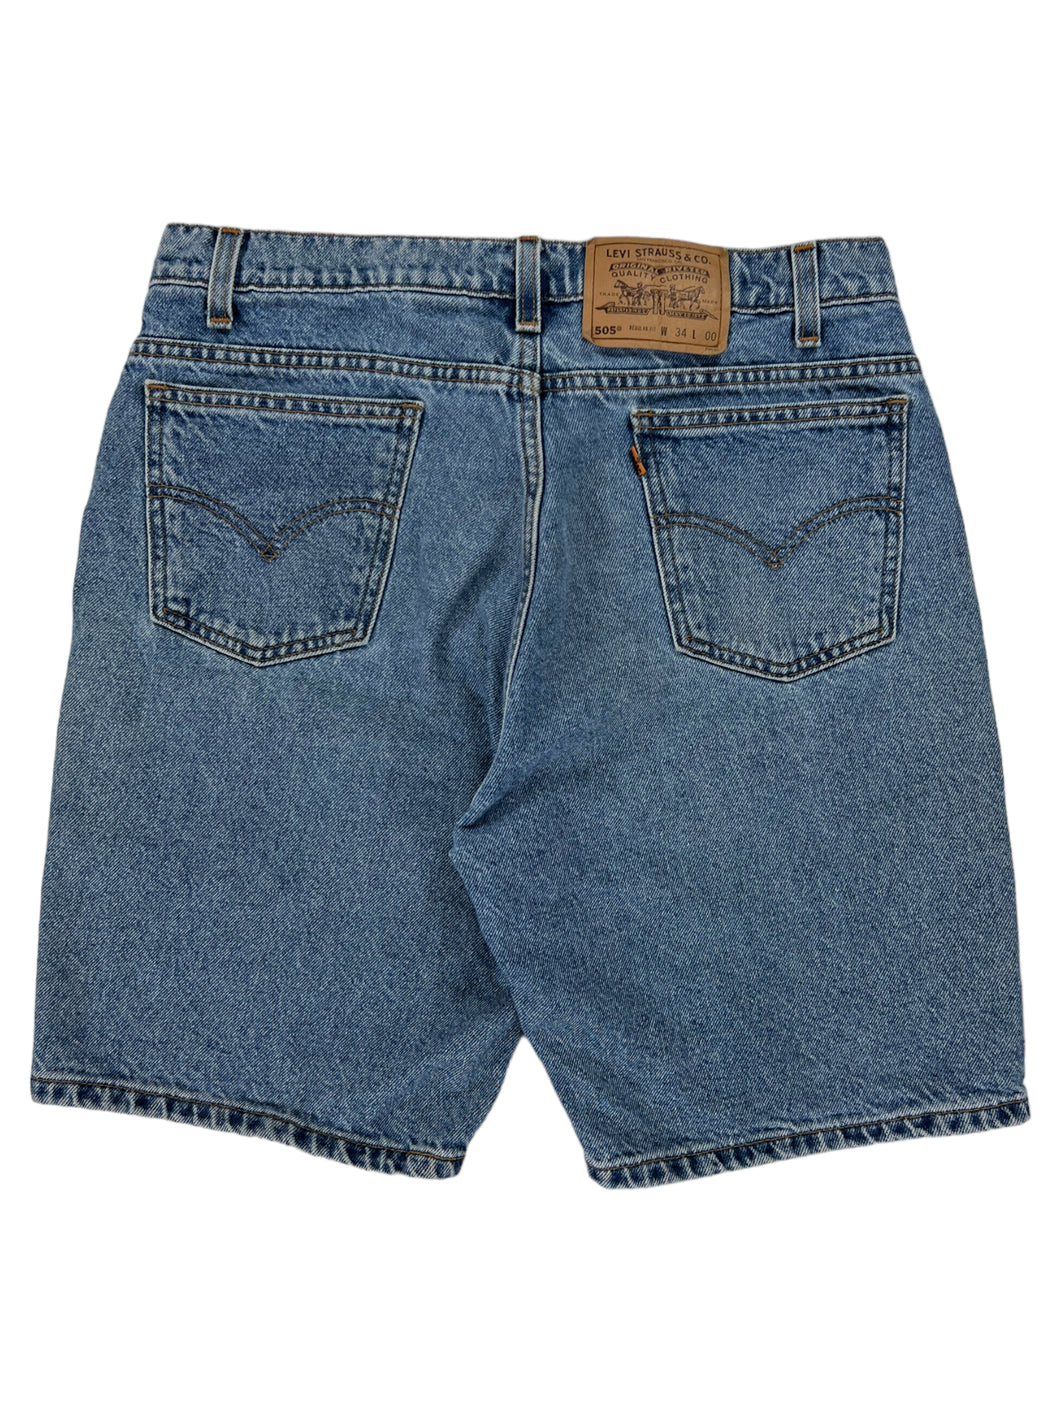 Vintage 90s Levi’s 505 orange tab denim jean shorts (32)